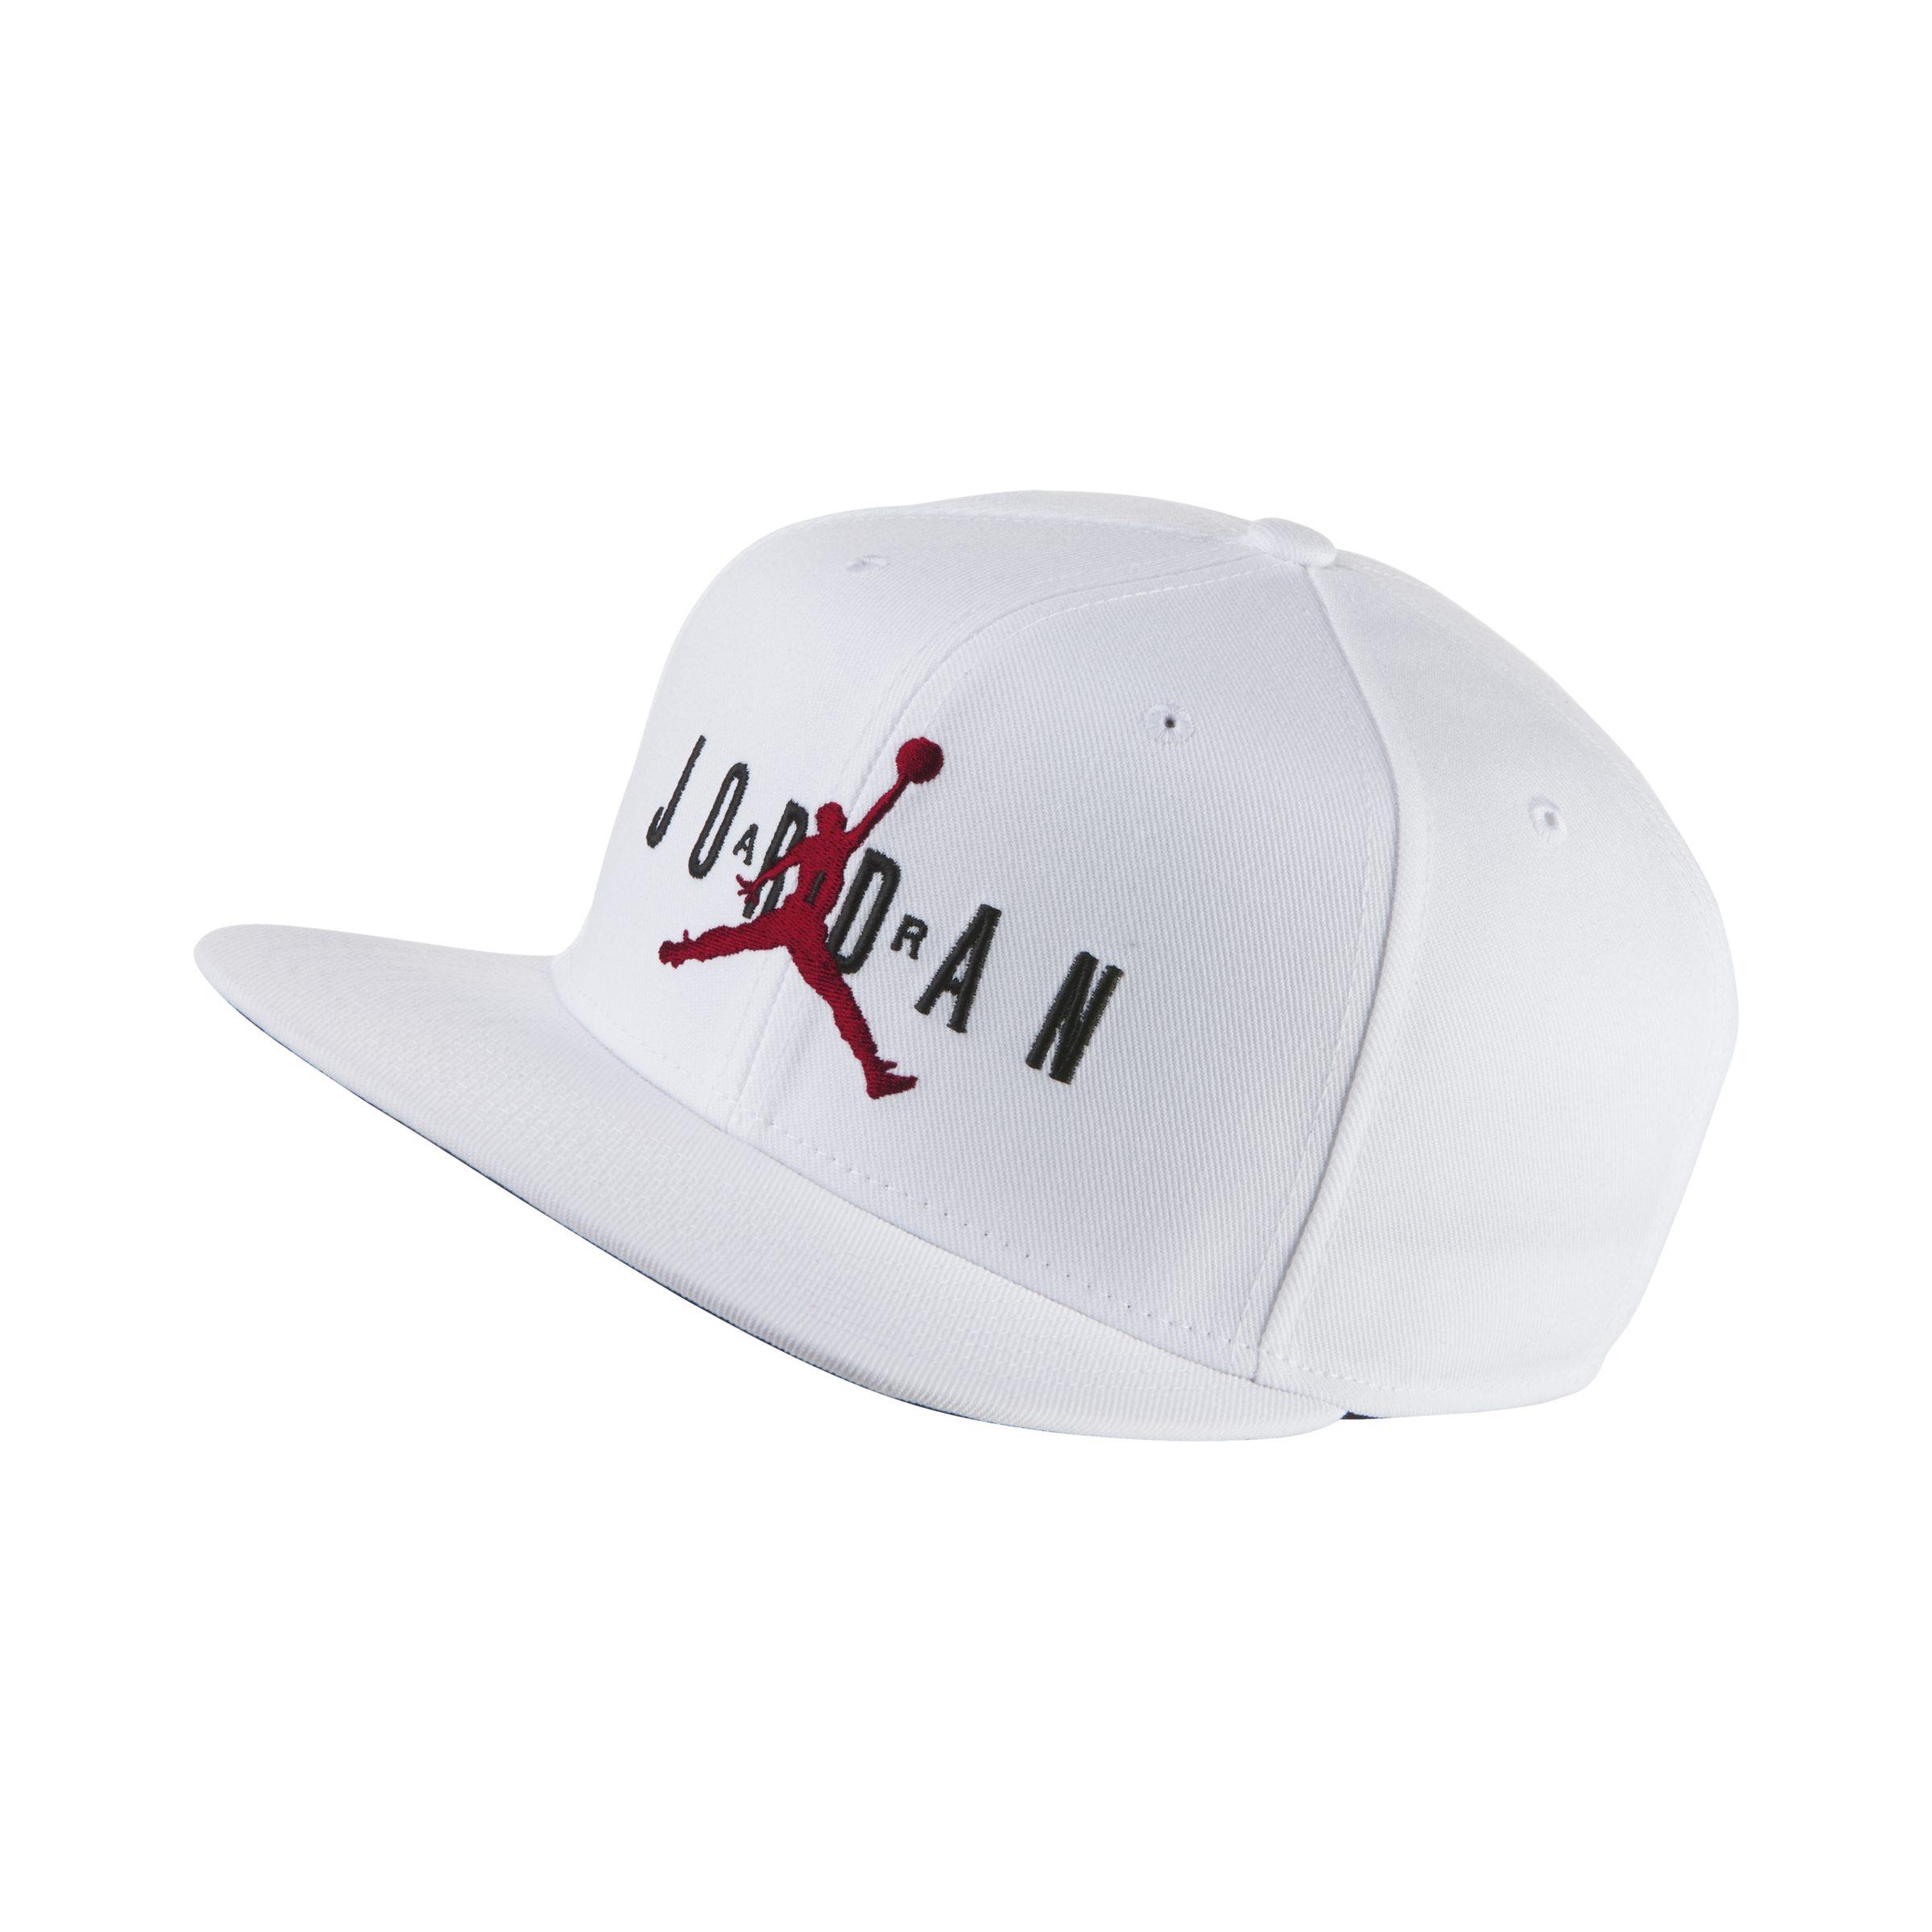 Nike Jordan Pro Jumpman Air Adjustable Hat in White - Lyst